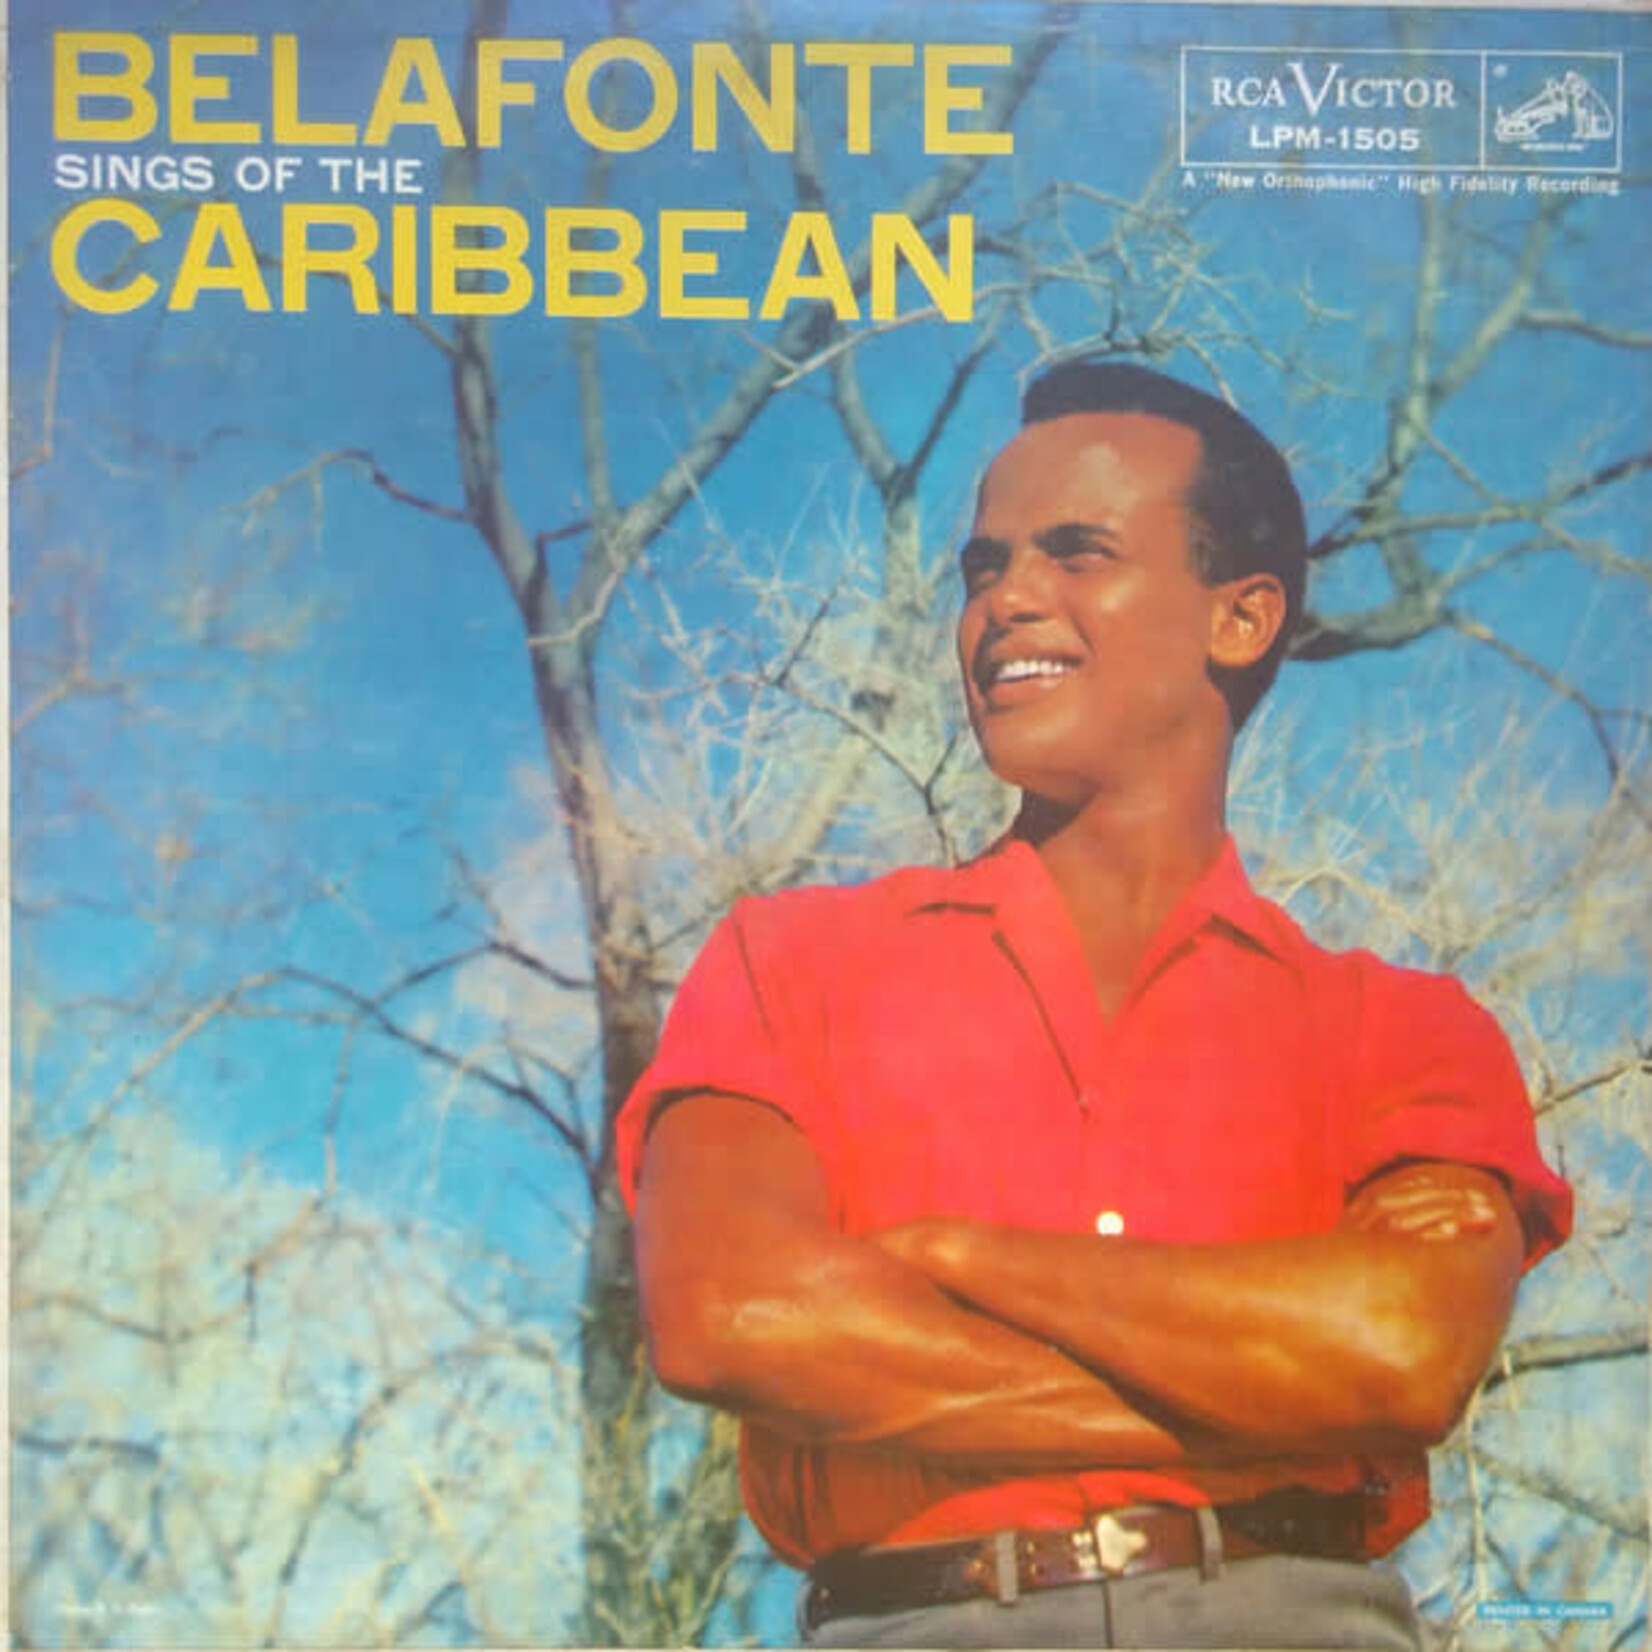 Harry Belafonte Harry Belafonte – Belafonte Sings Of The Caribbean (VG, LP, RCA Victor LPM-1505)